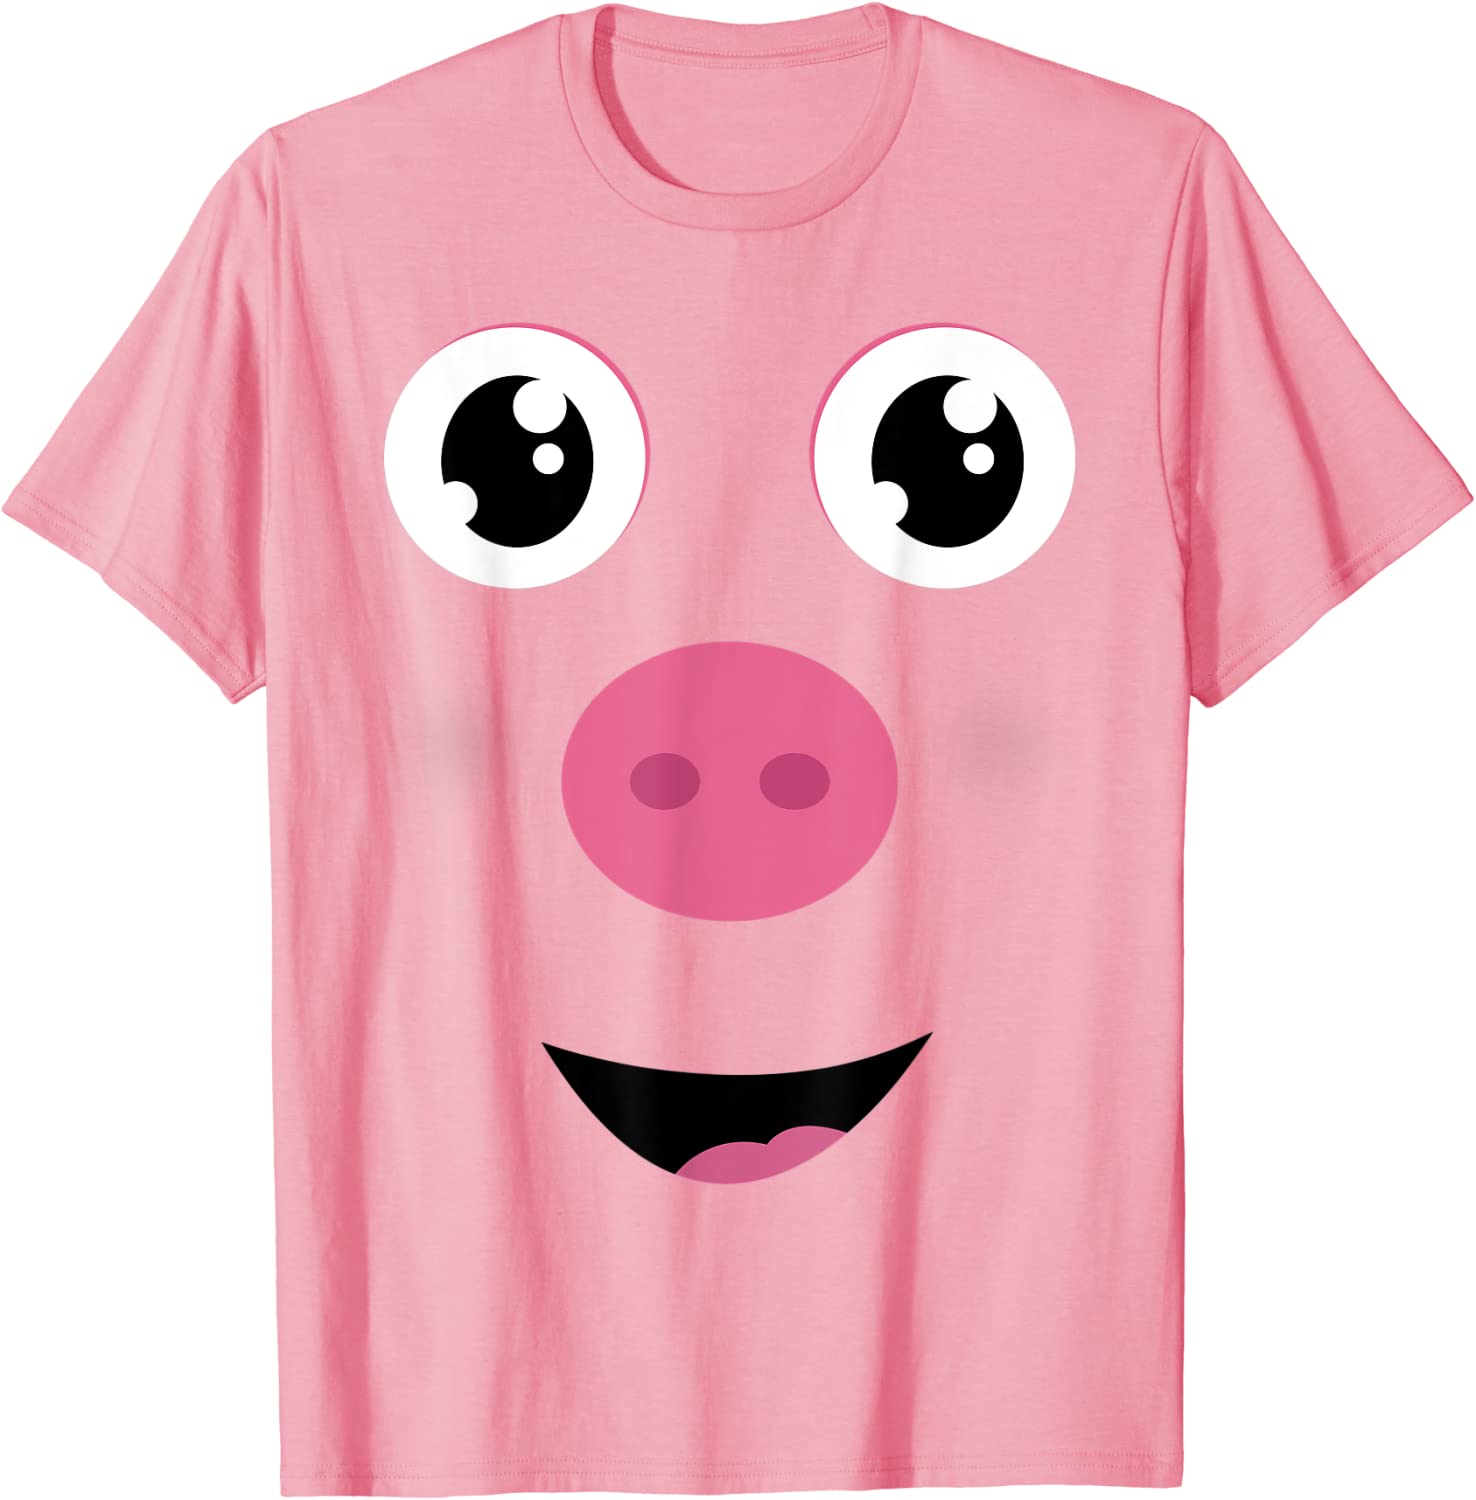 Pig Faced Smile T-Shirt